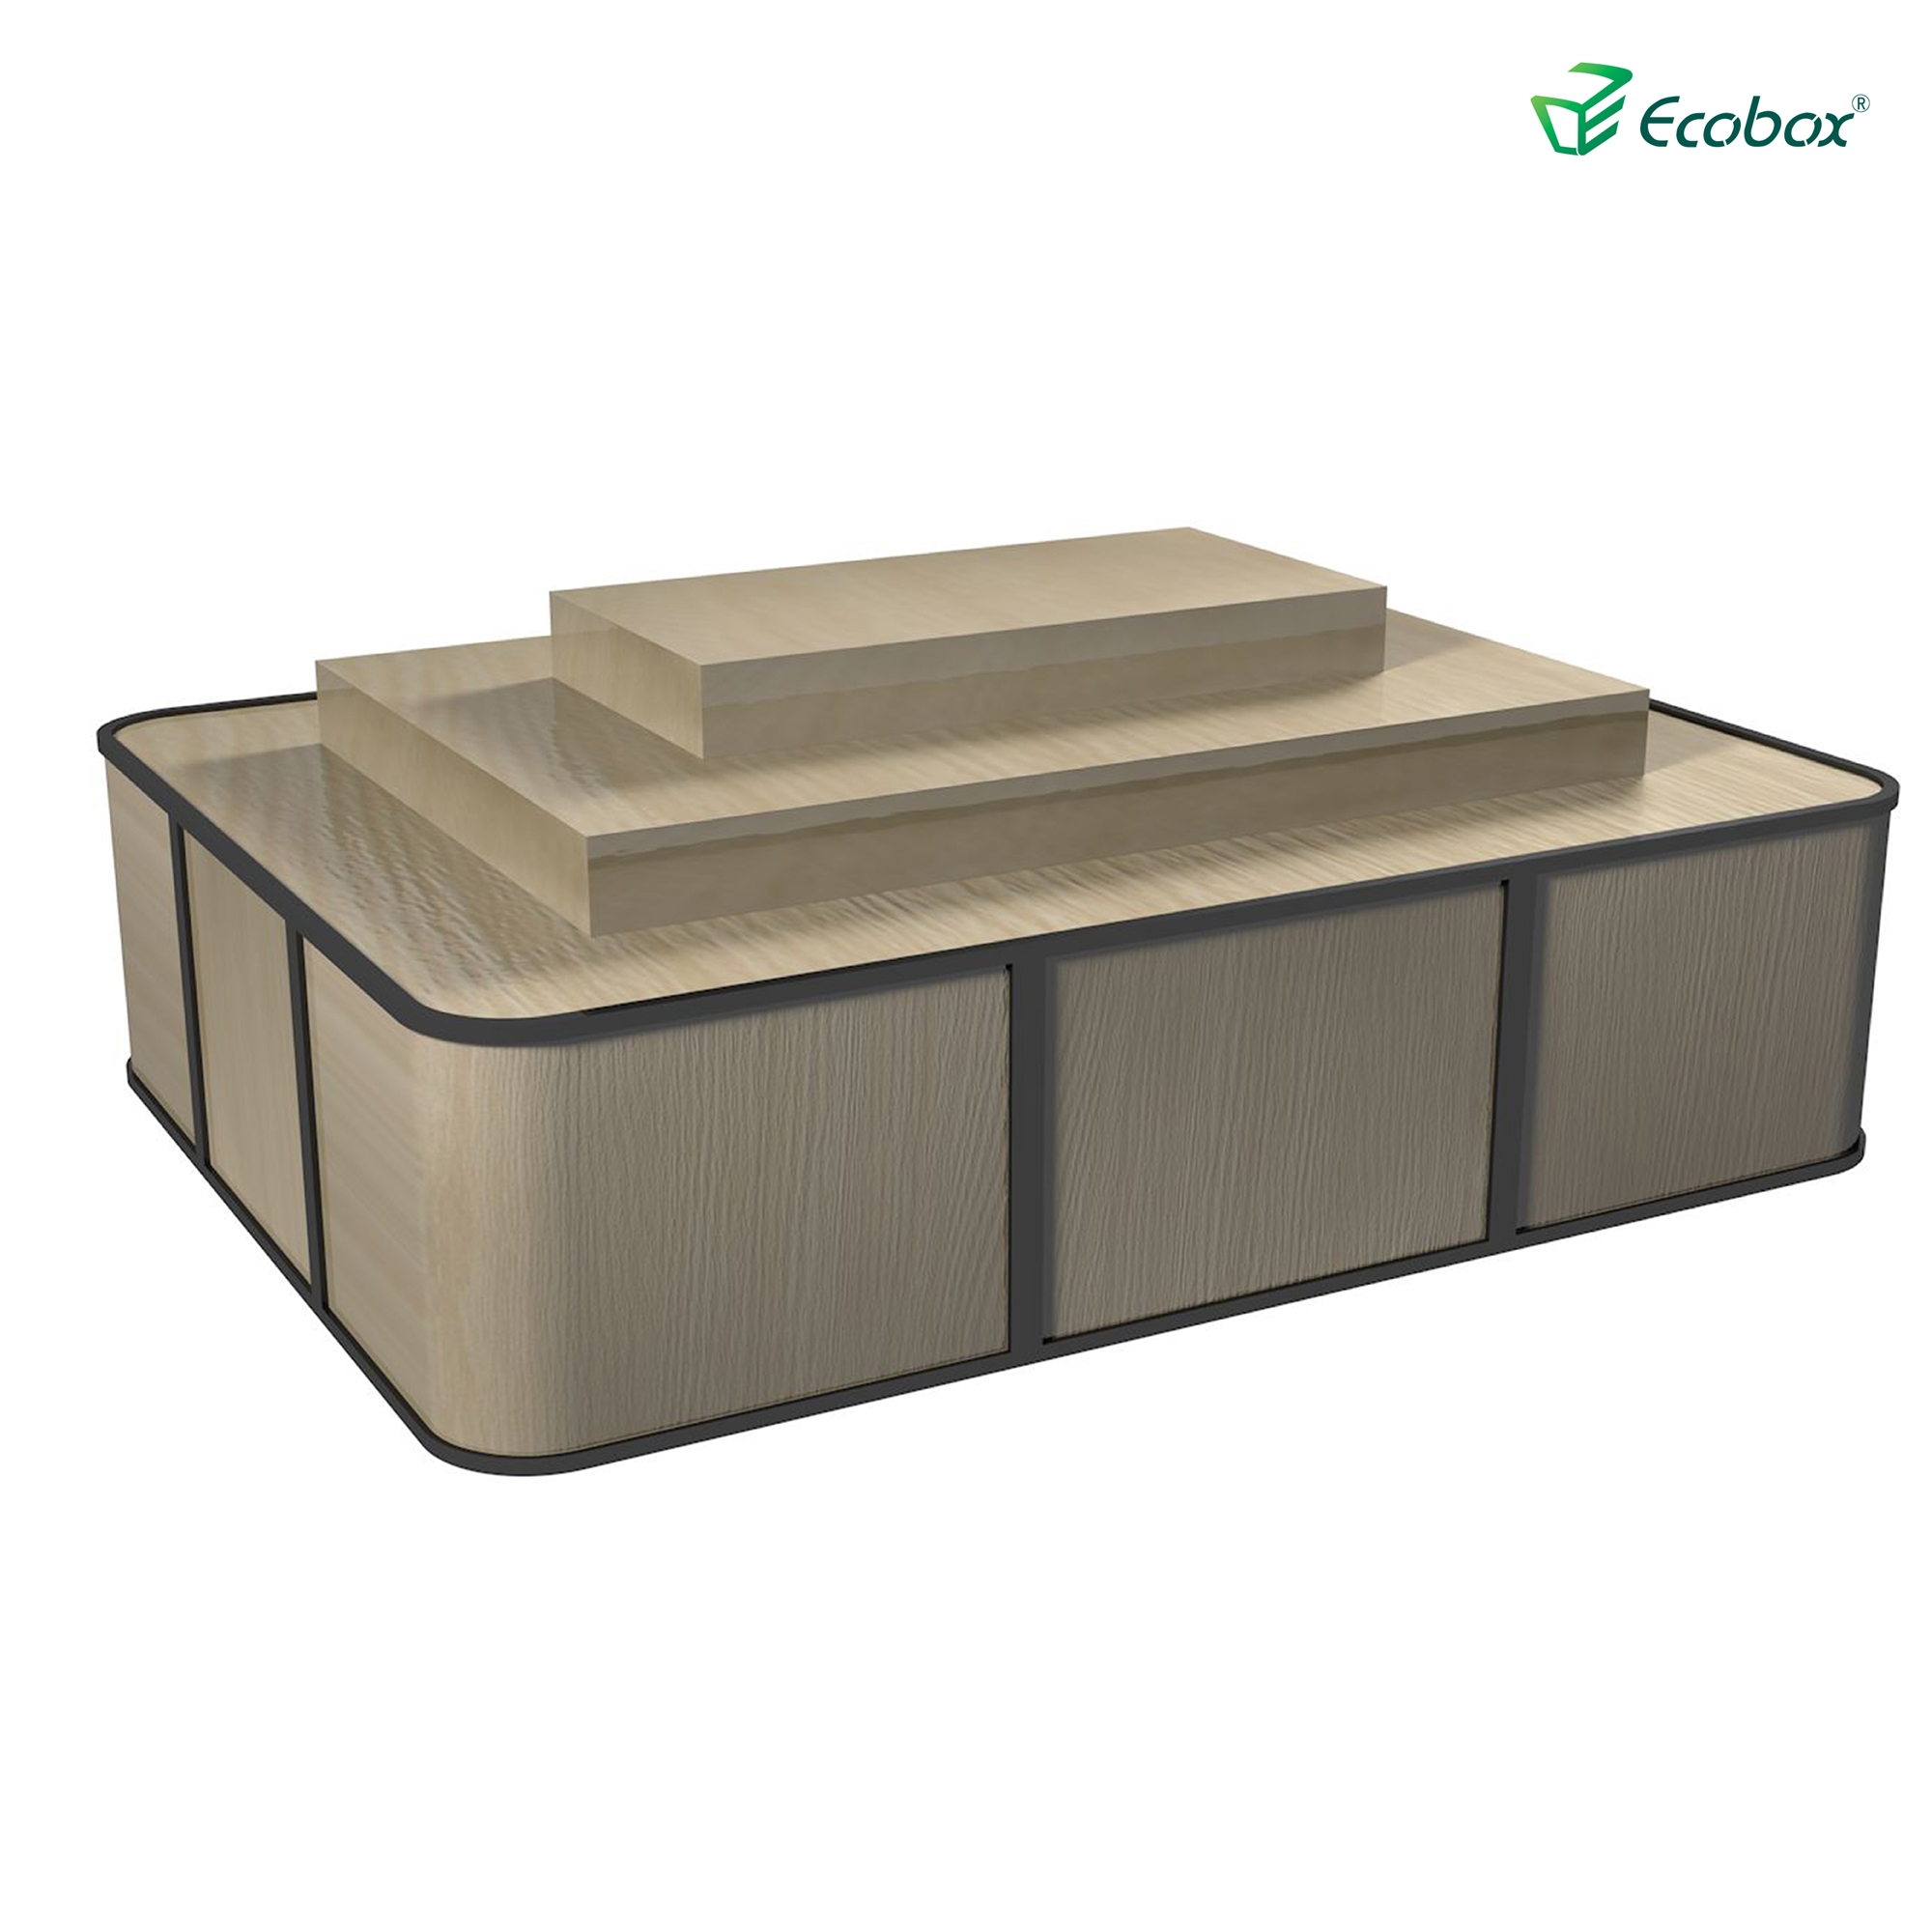 Estante de la serie Ecobox G004 con exhibidores de alimentos a granel de supermercado de contenedores a granel Ecobox